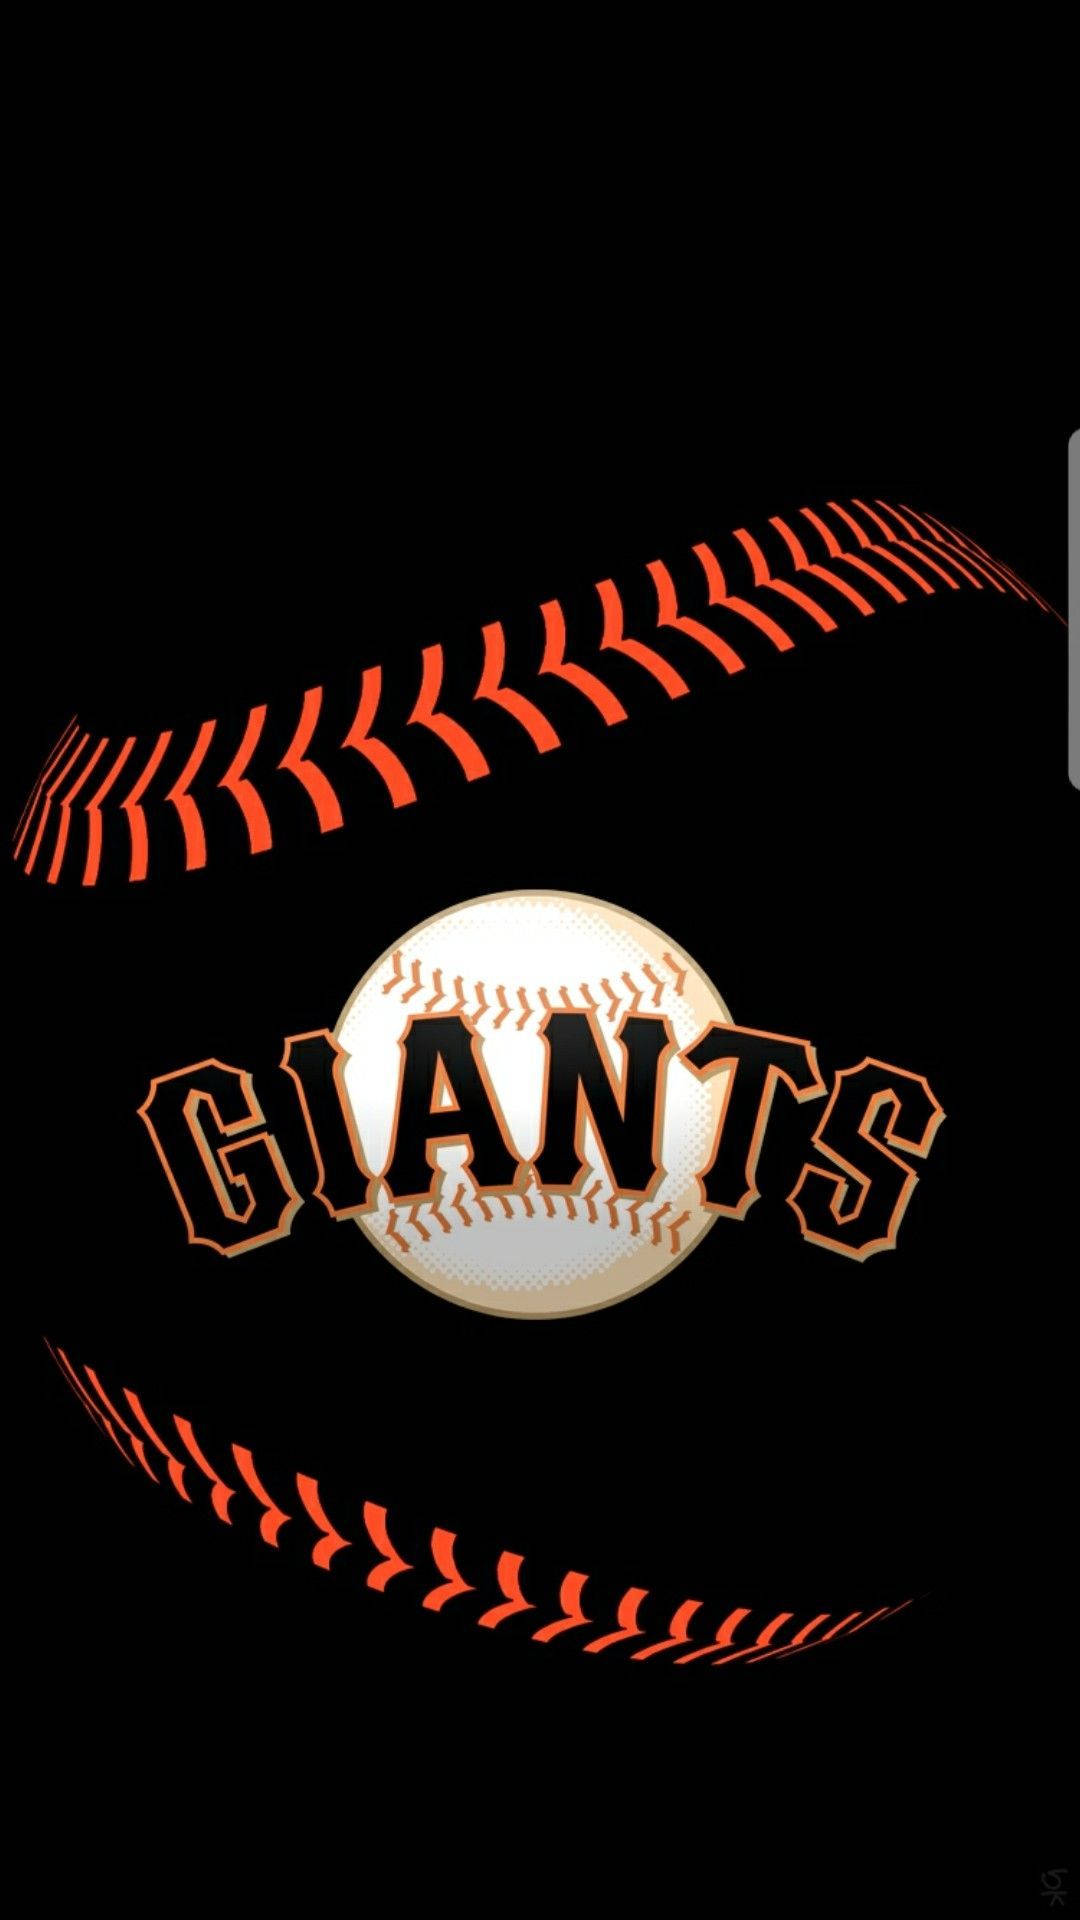 San Francisco Giants In The Baseball